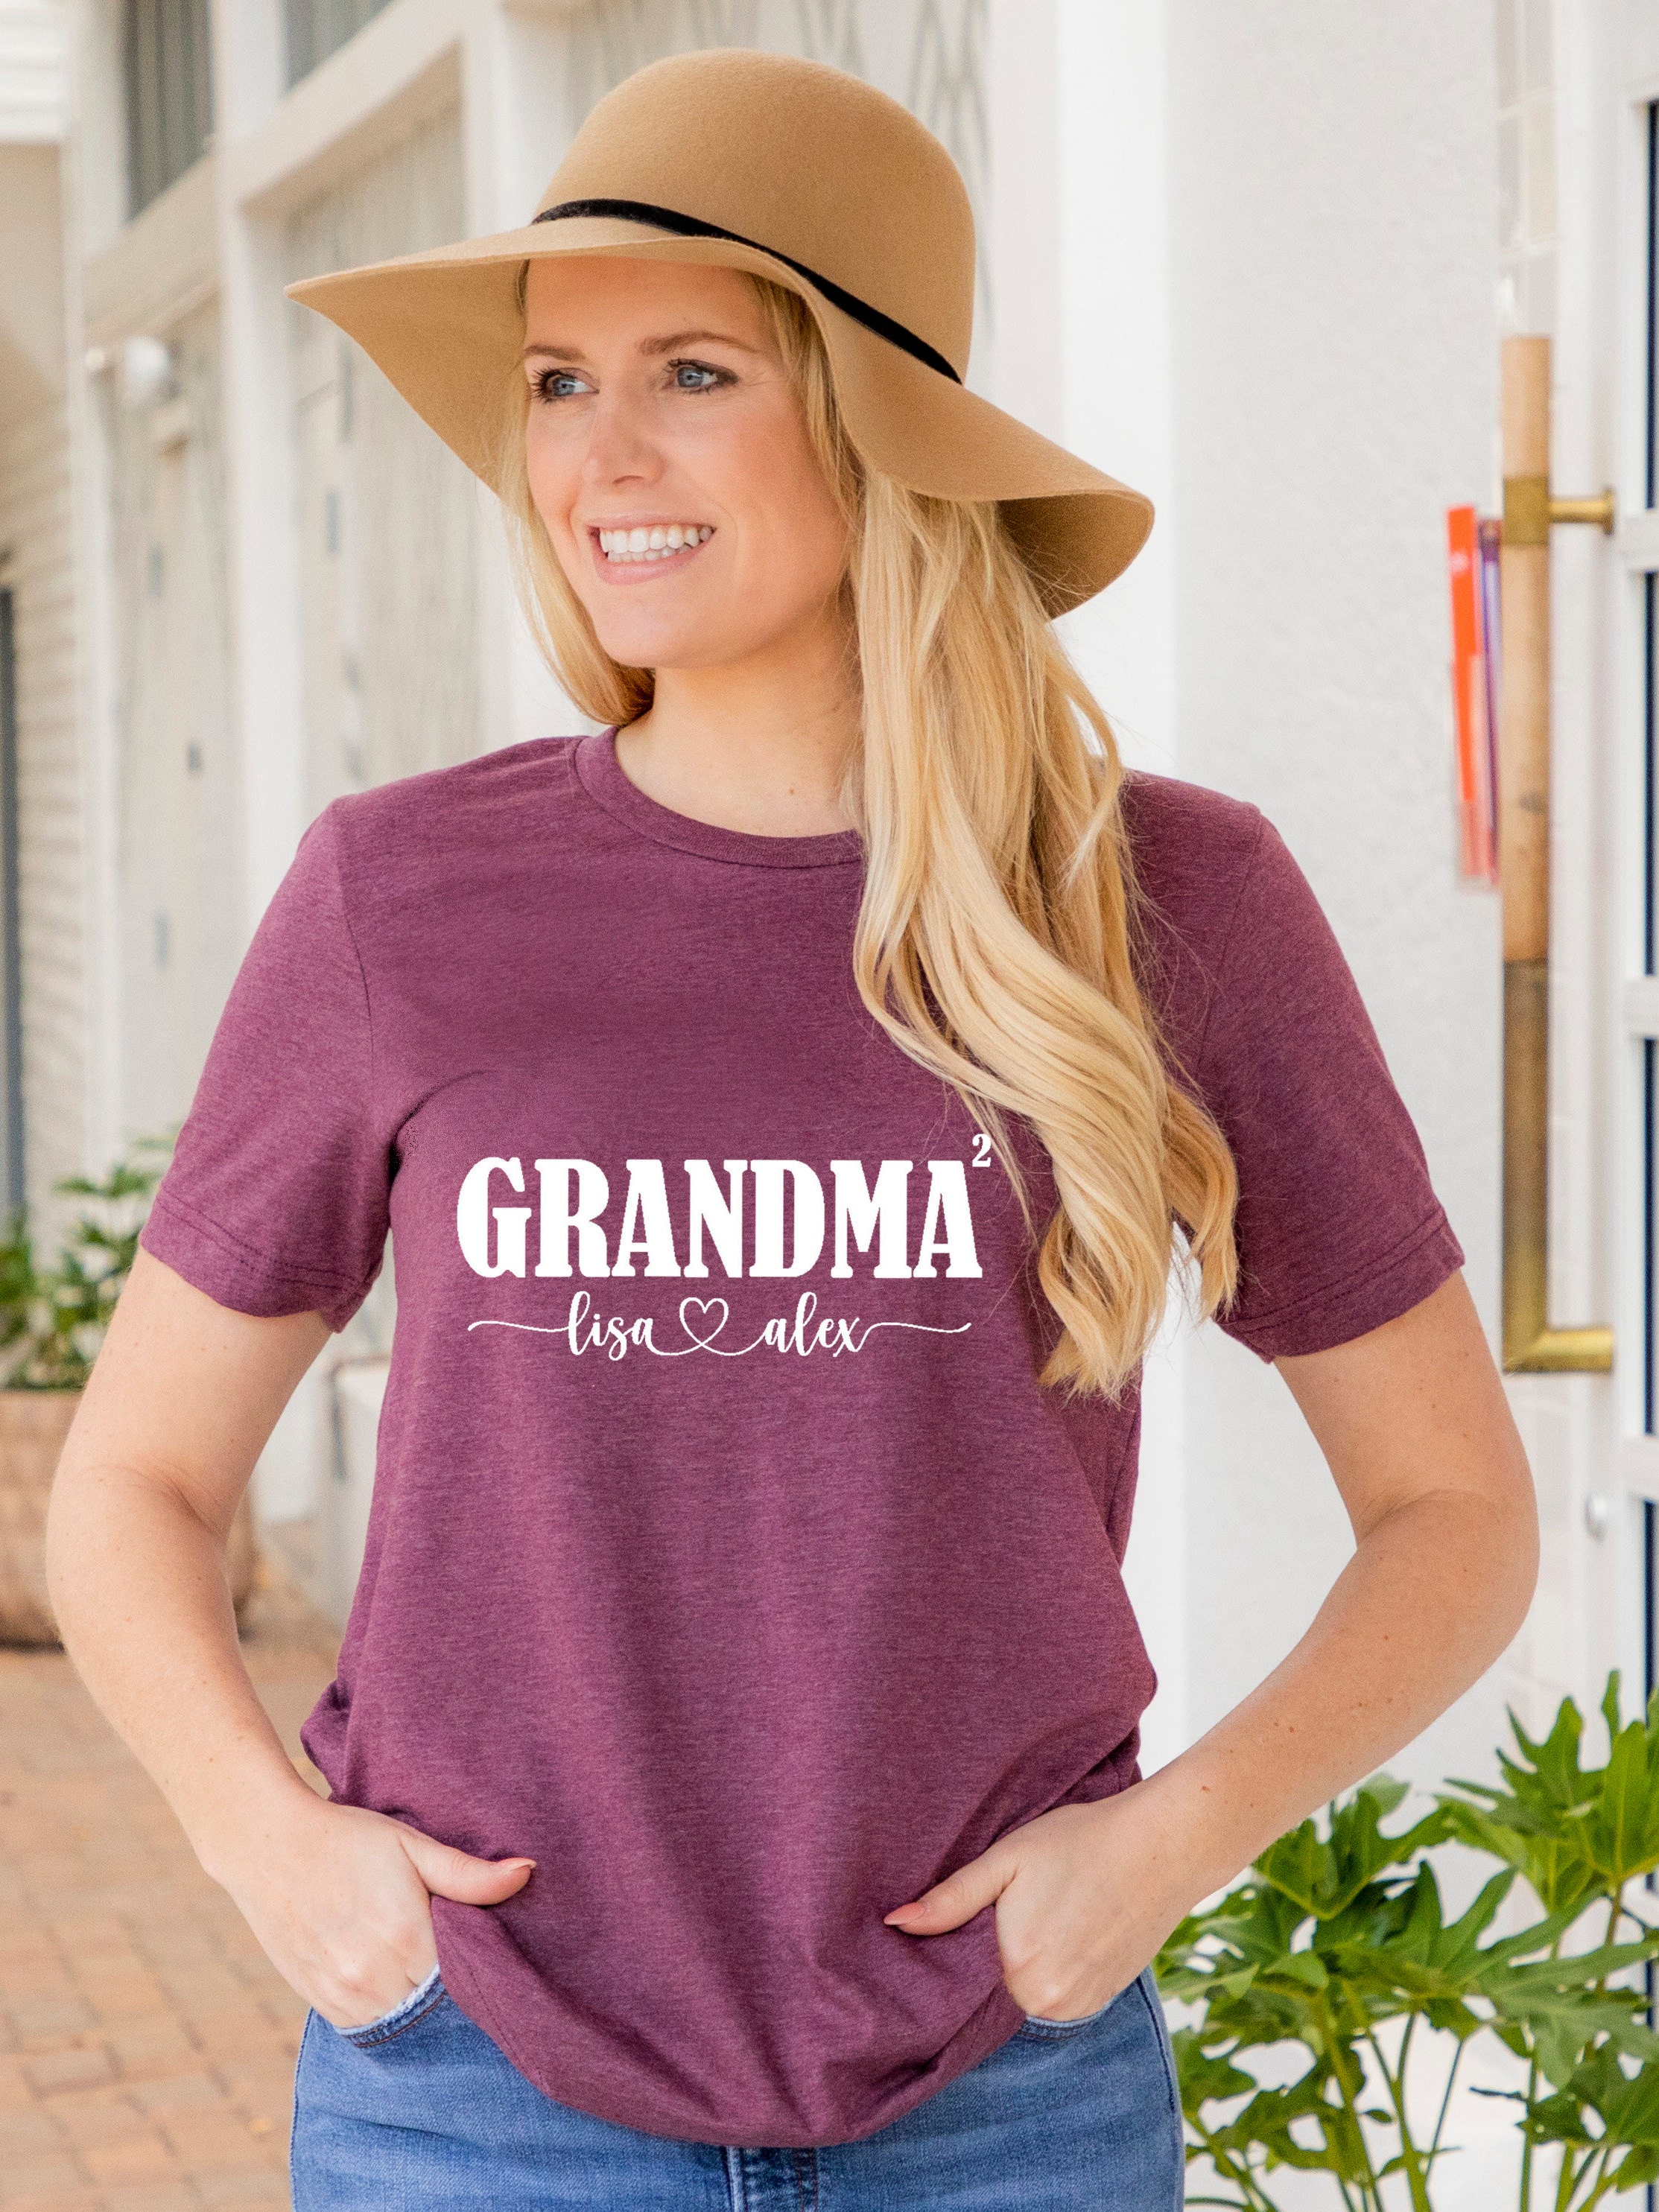 Grandma Shirt With Grandkids Names2 Grandchildren | Etsy